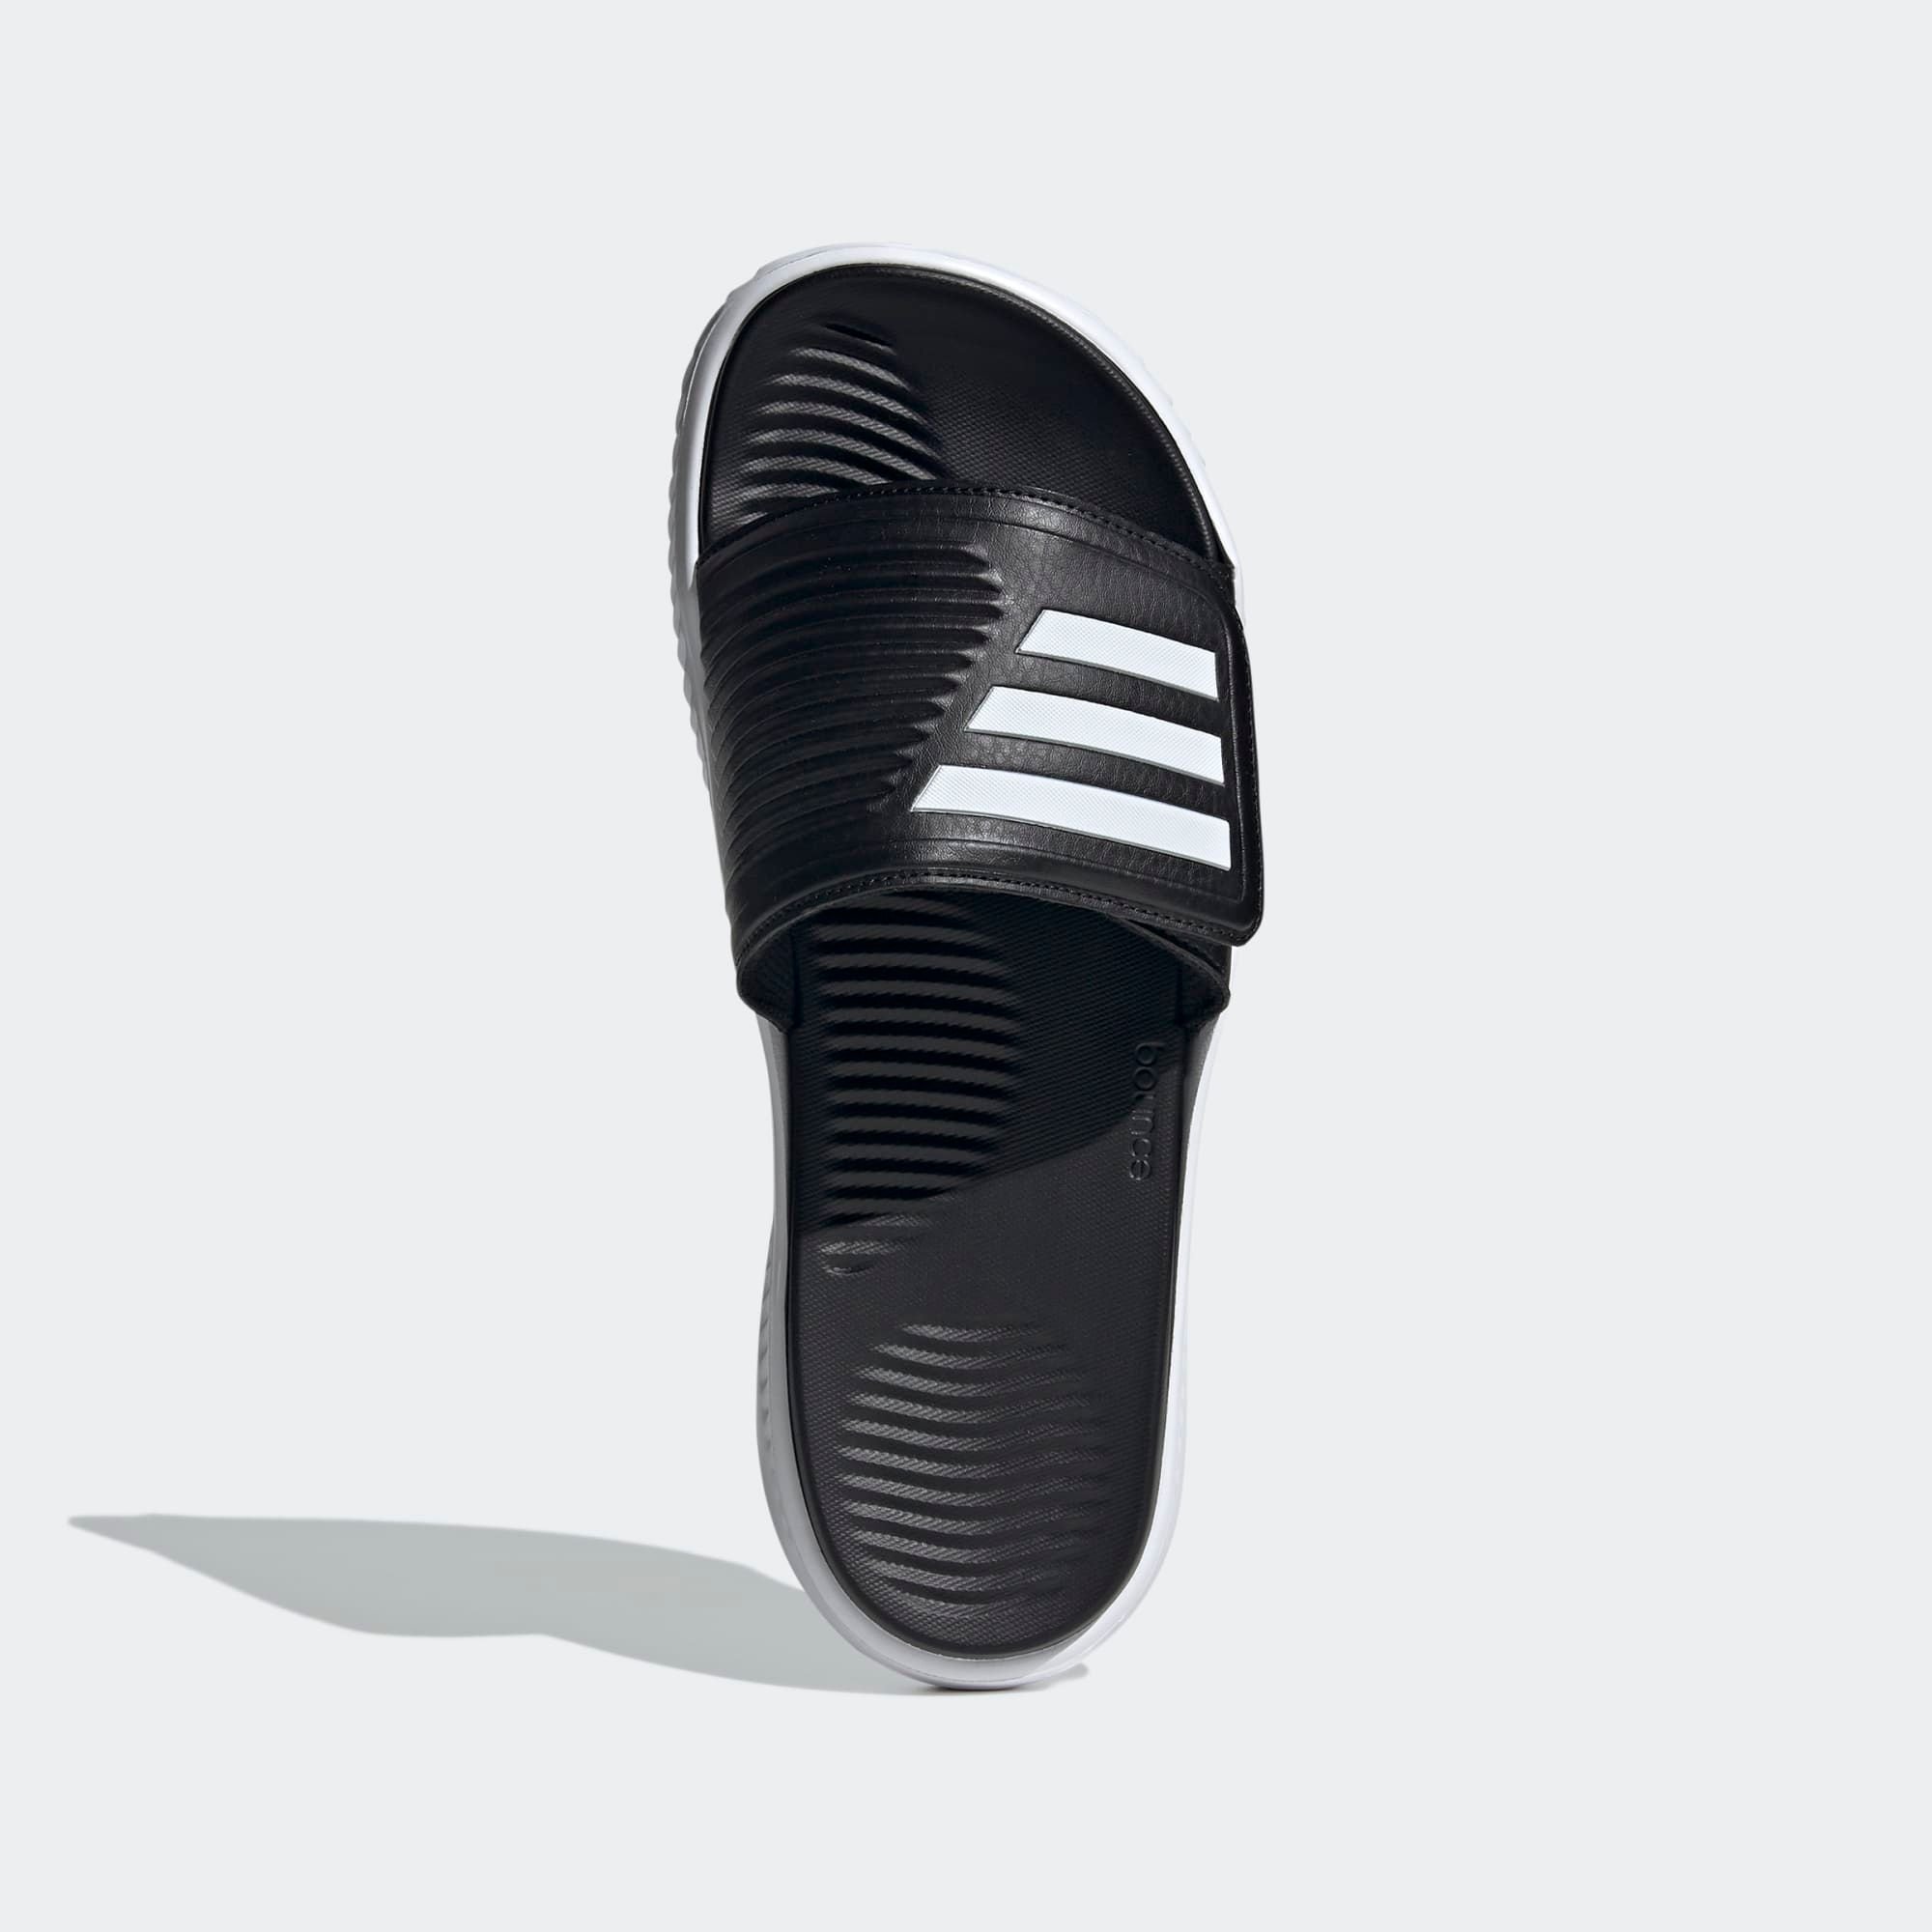  adidas Alphabounce Slides - Black / White 